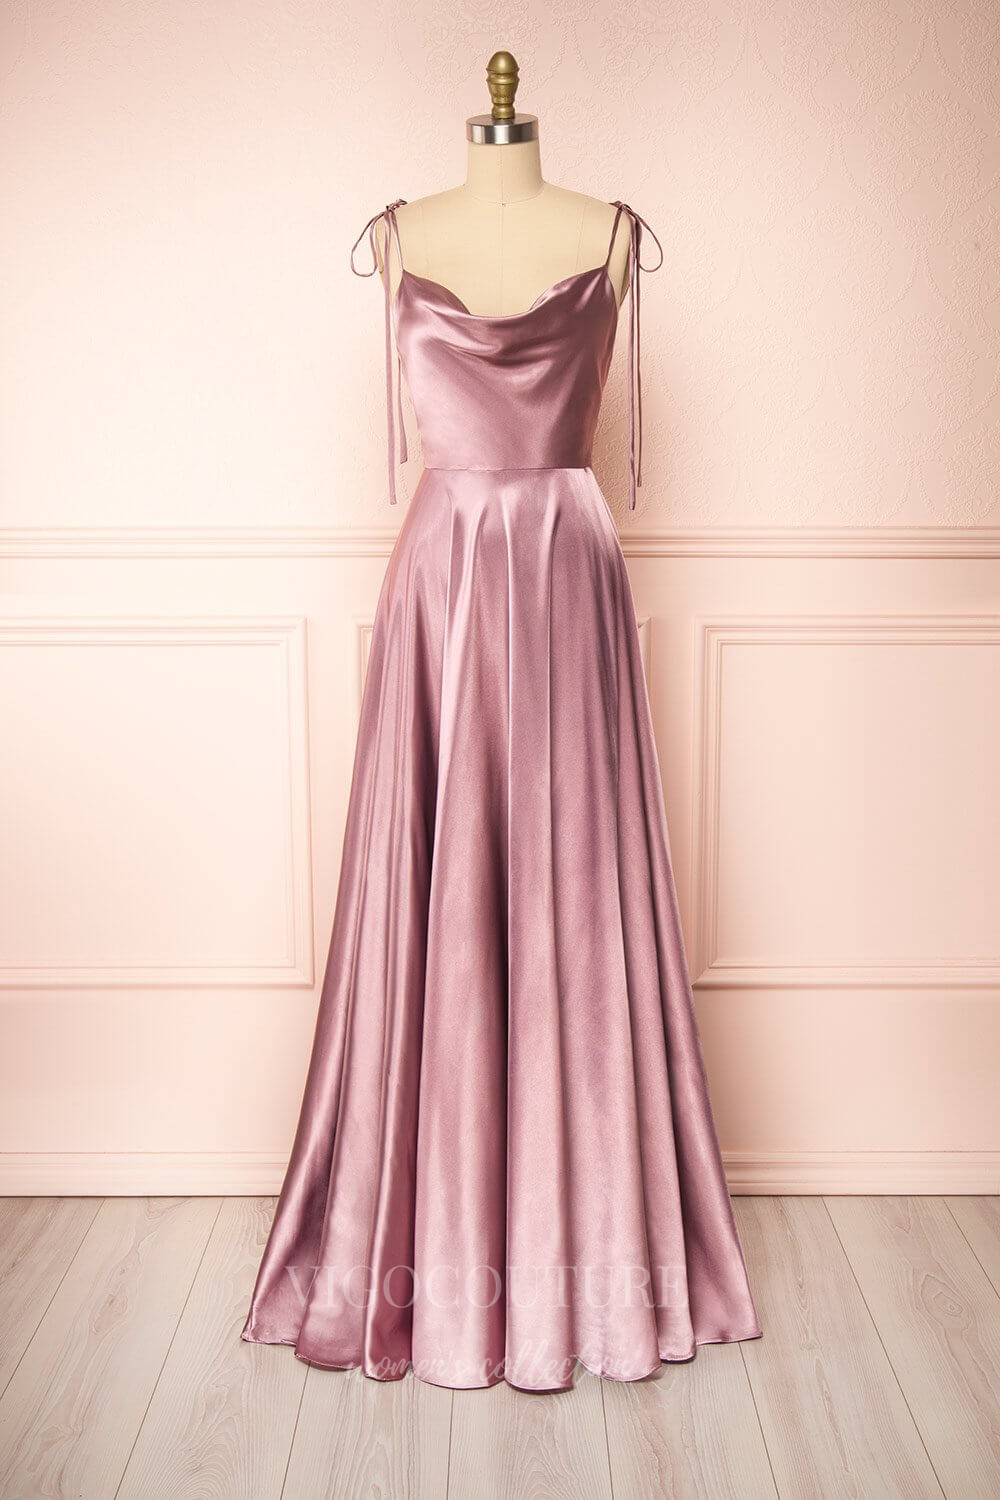 vigocouture-Blush Spaghetti Strap Prom Dress 20575-Prom Dresses-vigocouture-Dusty Pink-US2-